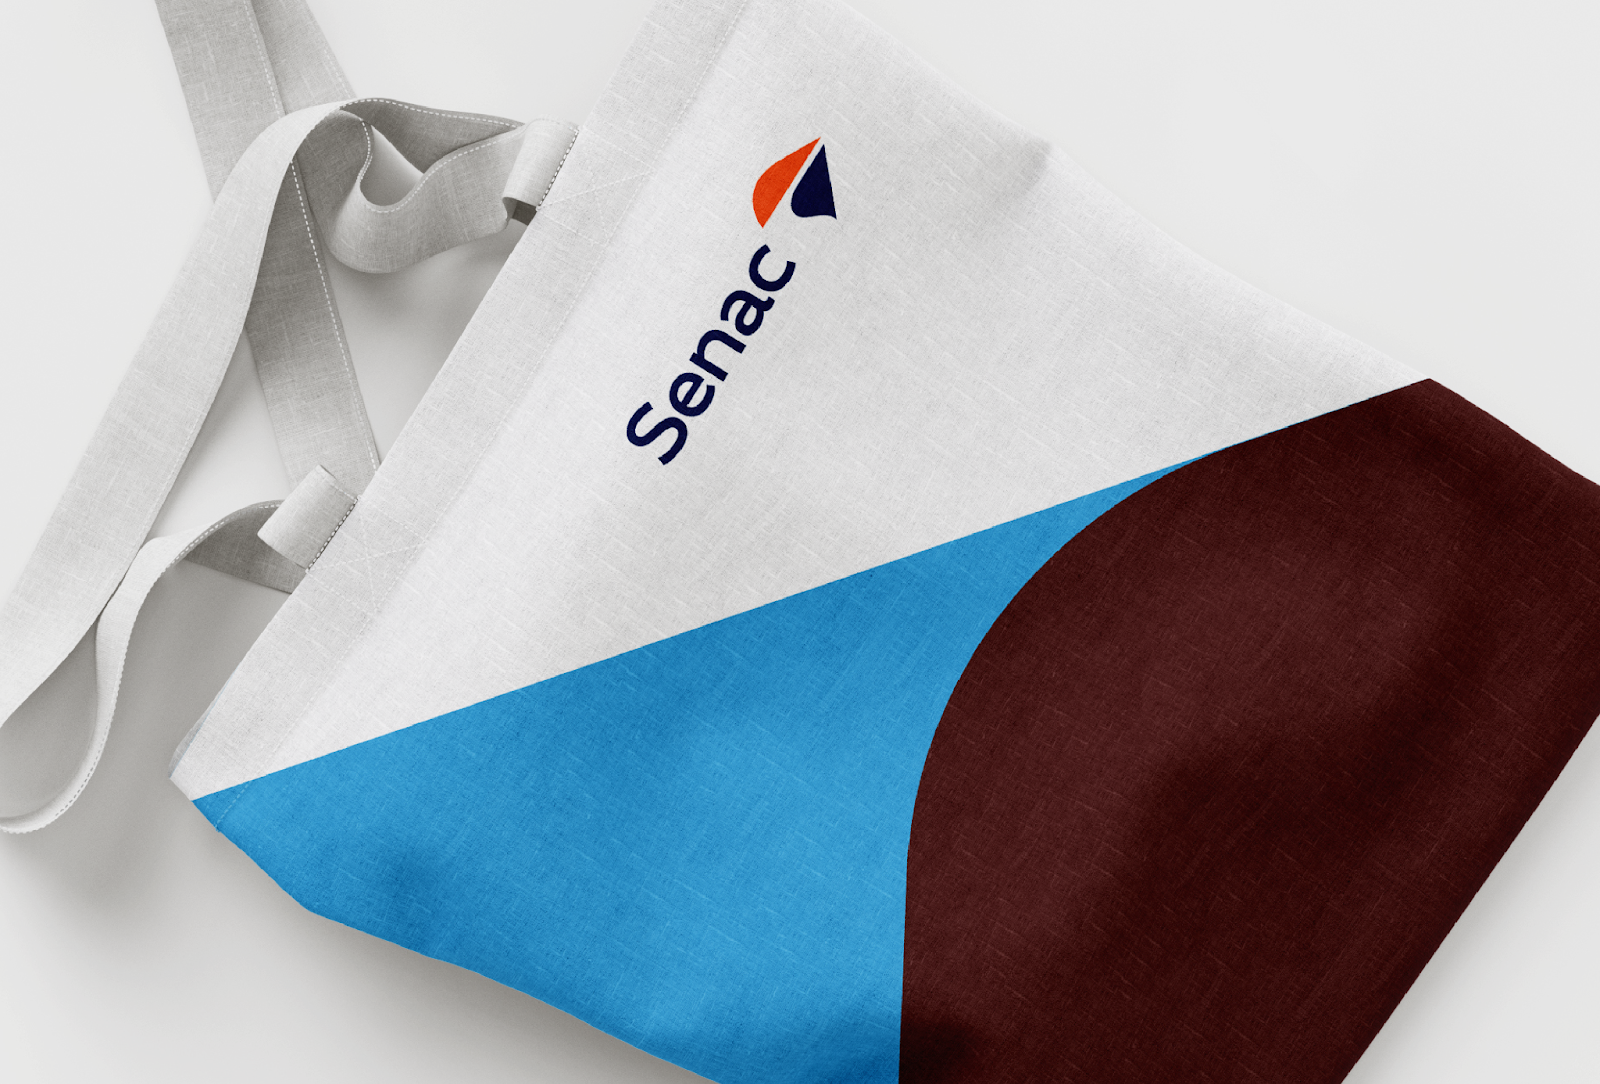 Branding and visual identity artifact for the new Senac brand